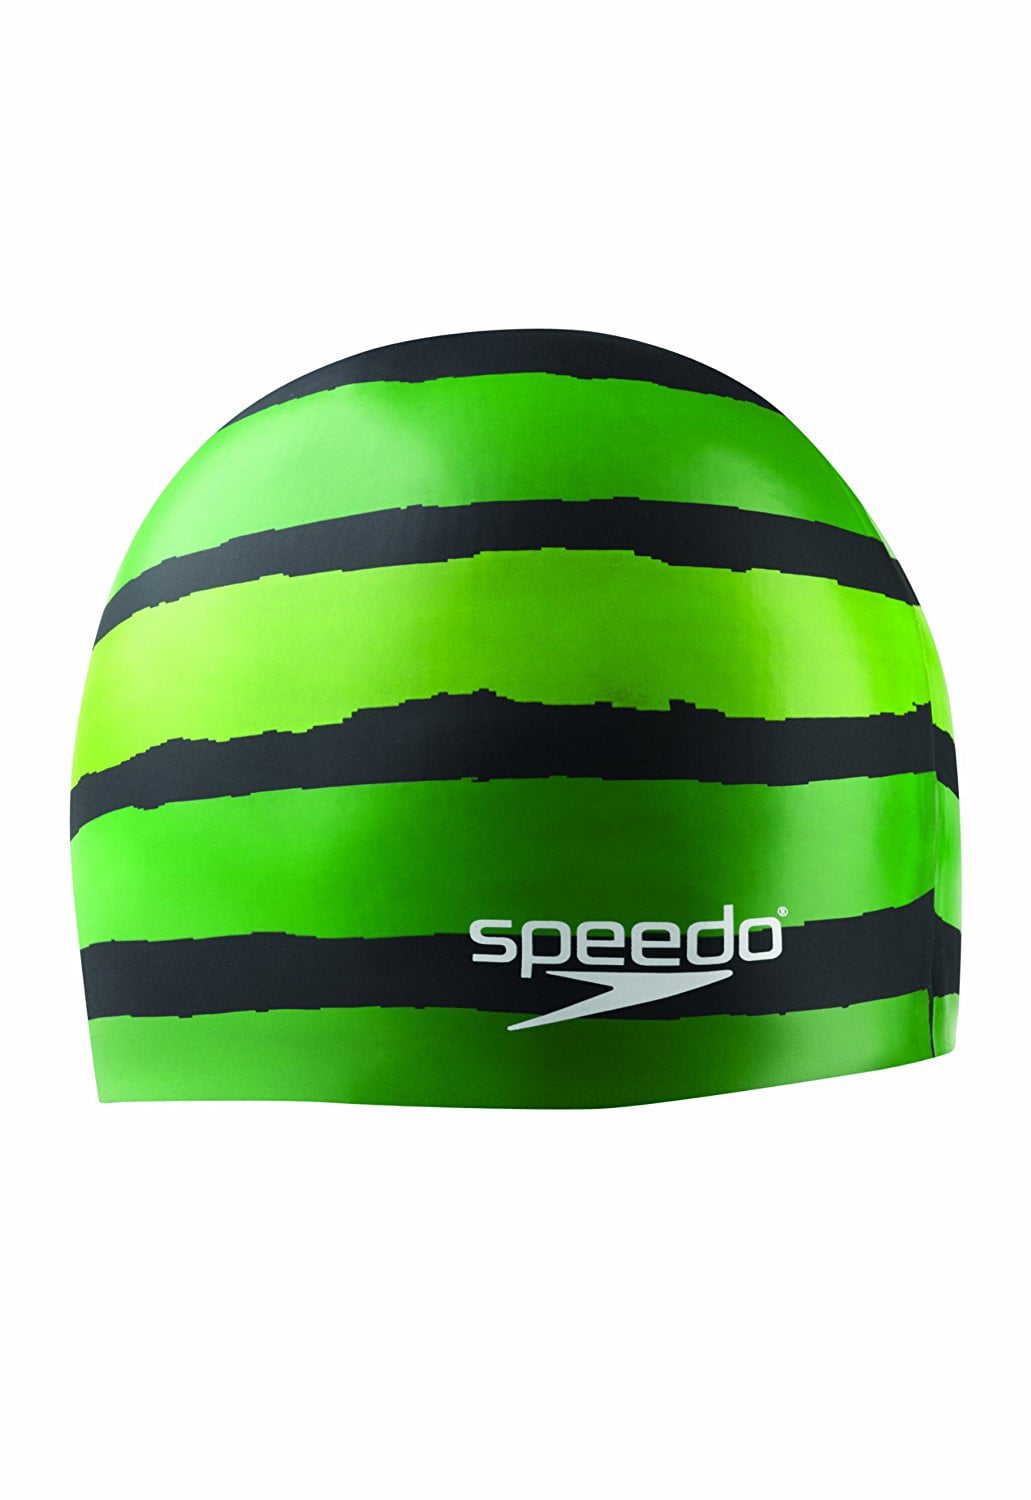 Speedo Swim Cap Adult Flash Forward Unisex Silicone Competition Green/Black 283 